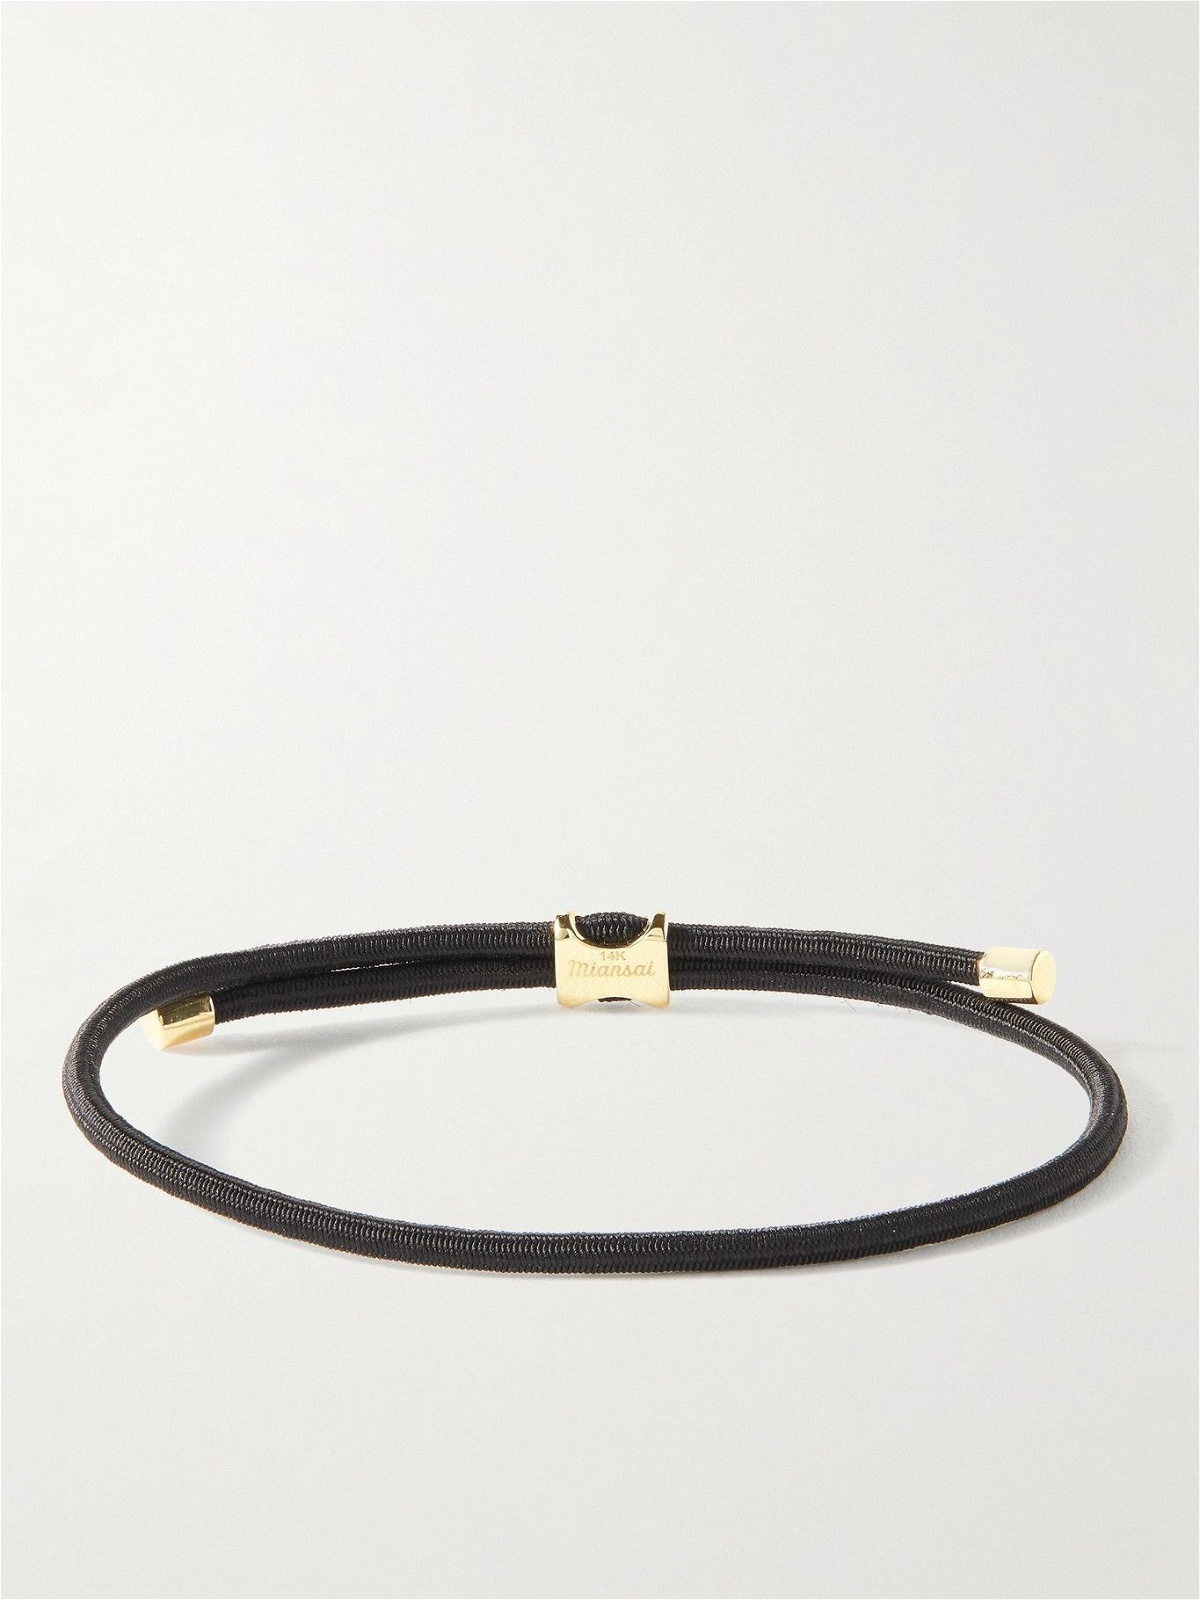 Orson Pull Bungee Rope Bracelet, Gold Vermeil, Men's Bracelets